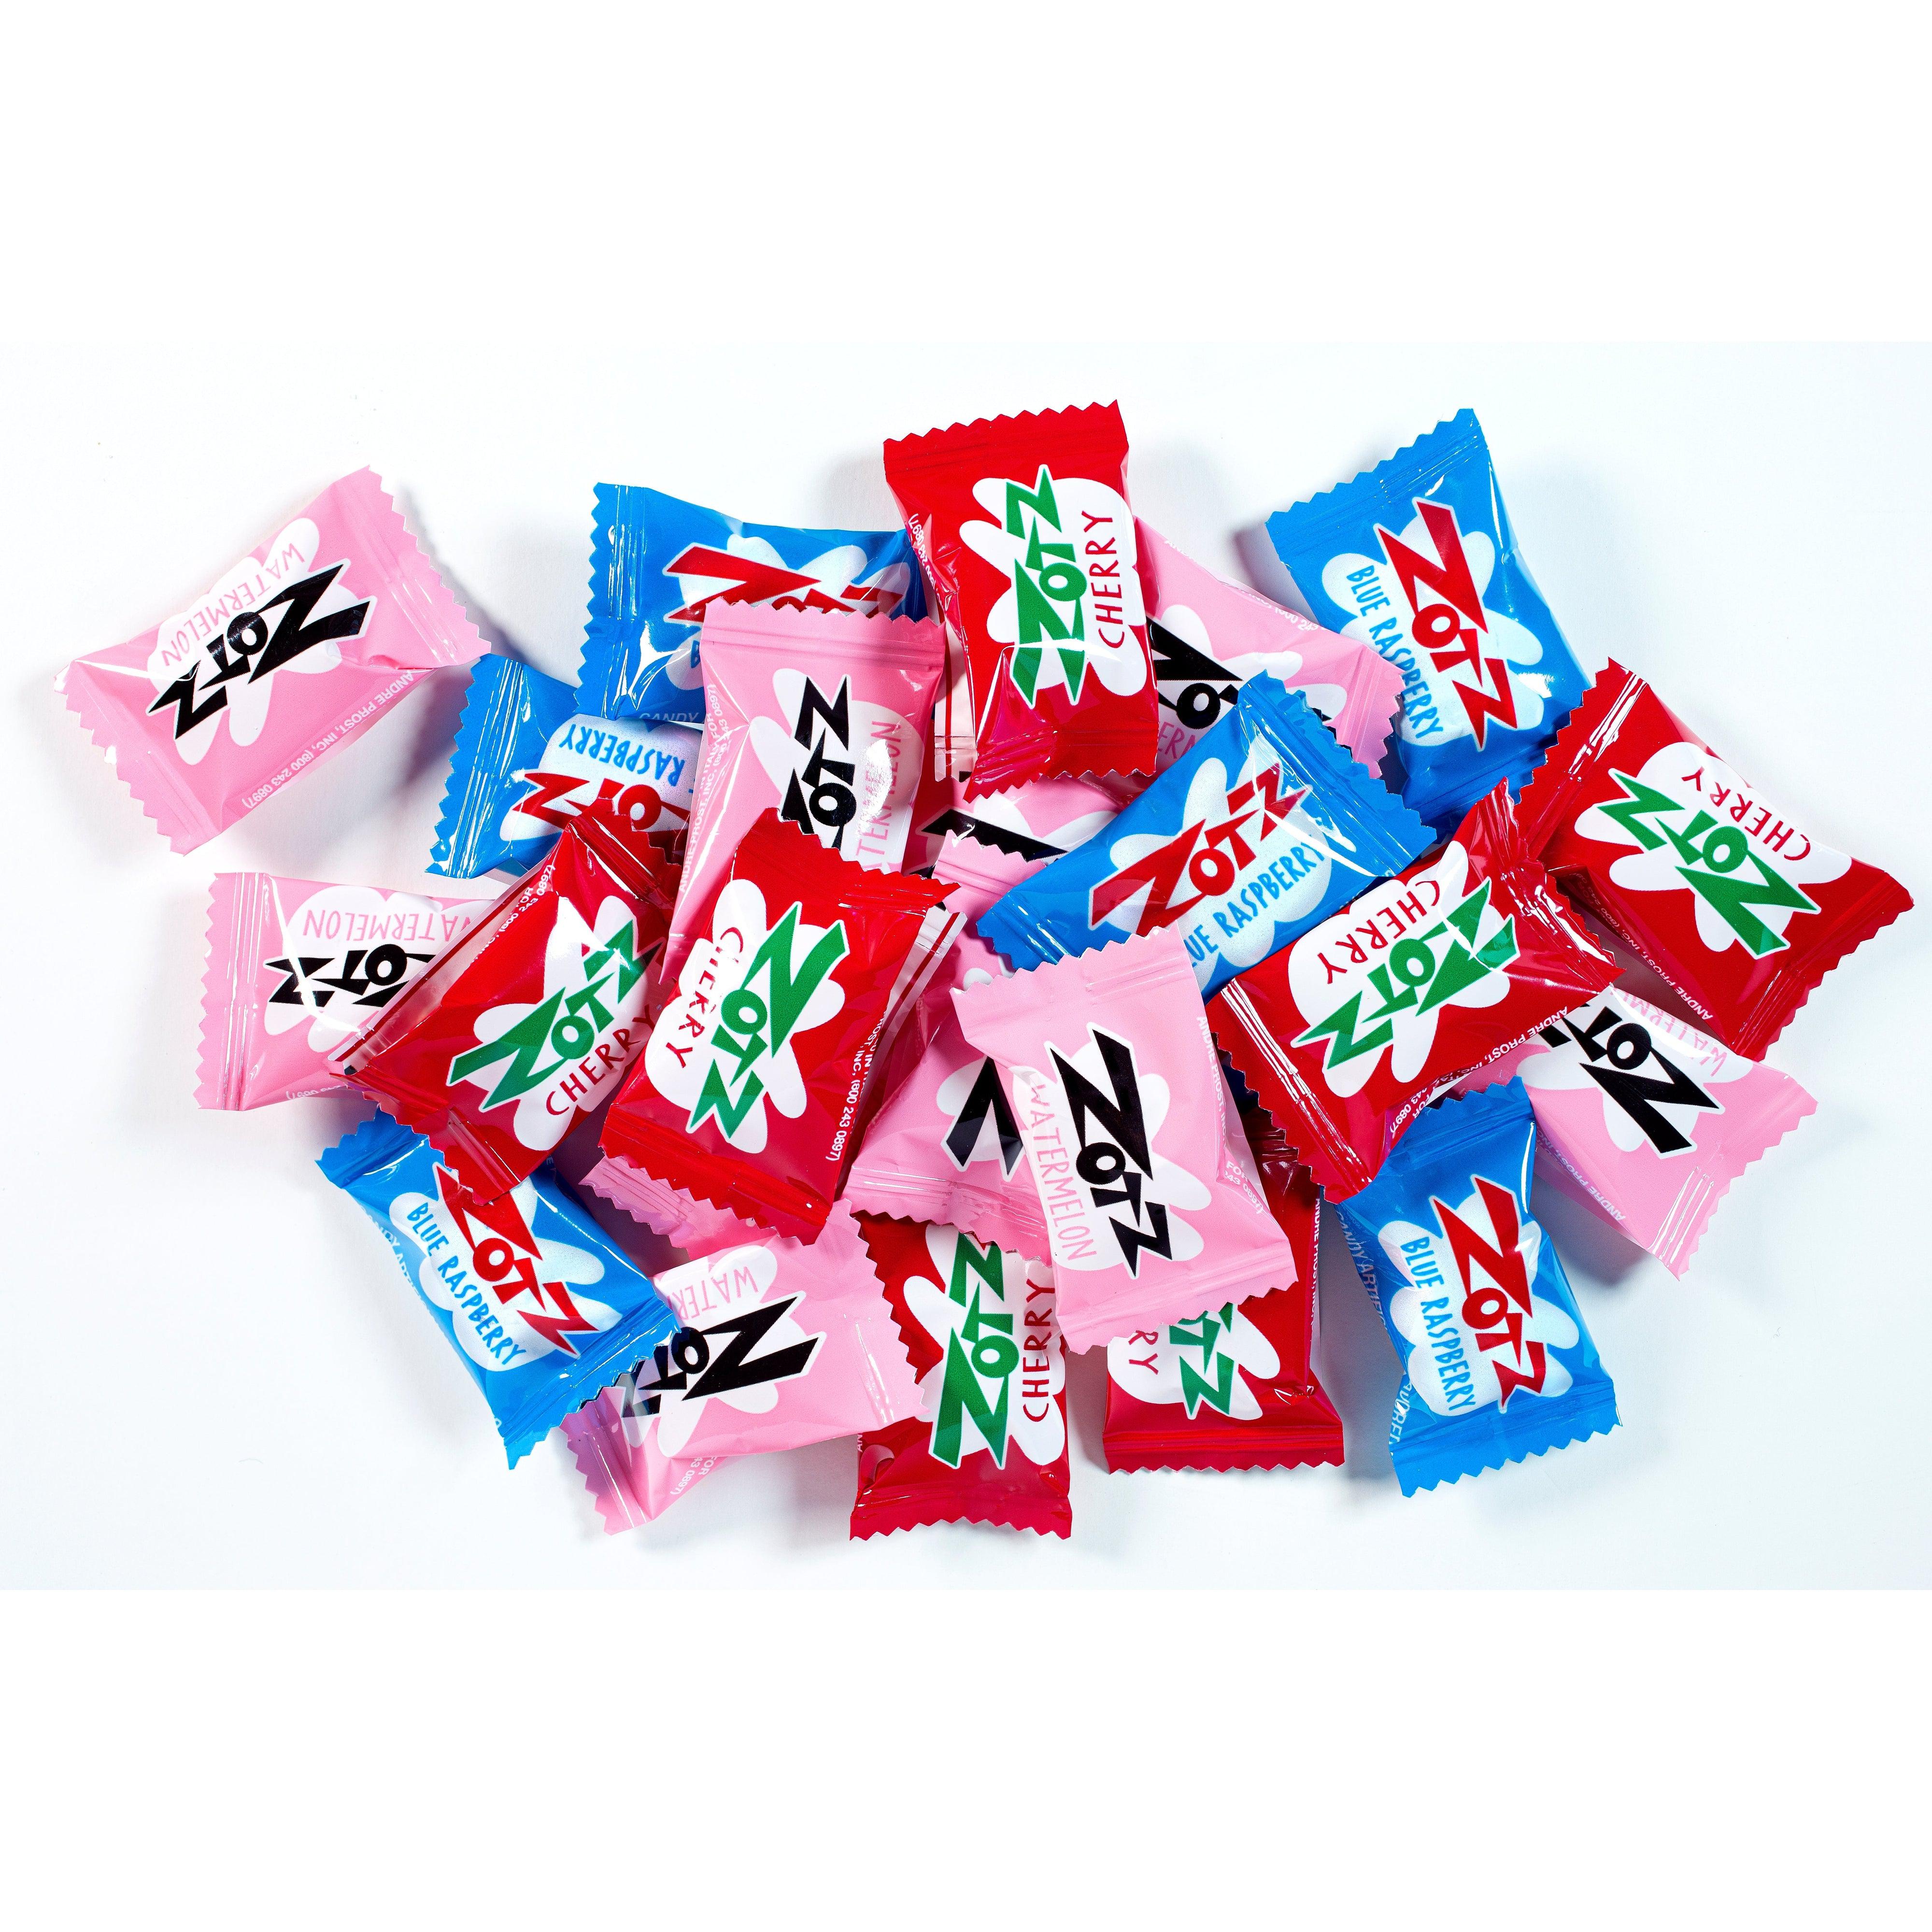 Zotz-Zotz Hard Candies 3 Assorted Flavors - 46 Piece 8.1 oz Bag-0583-Legacy Toys